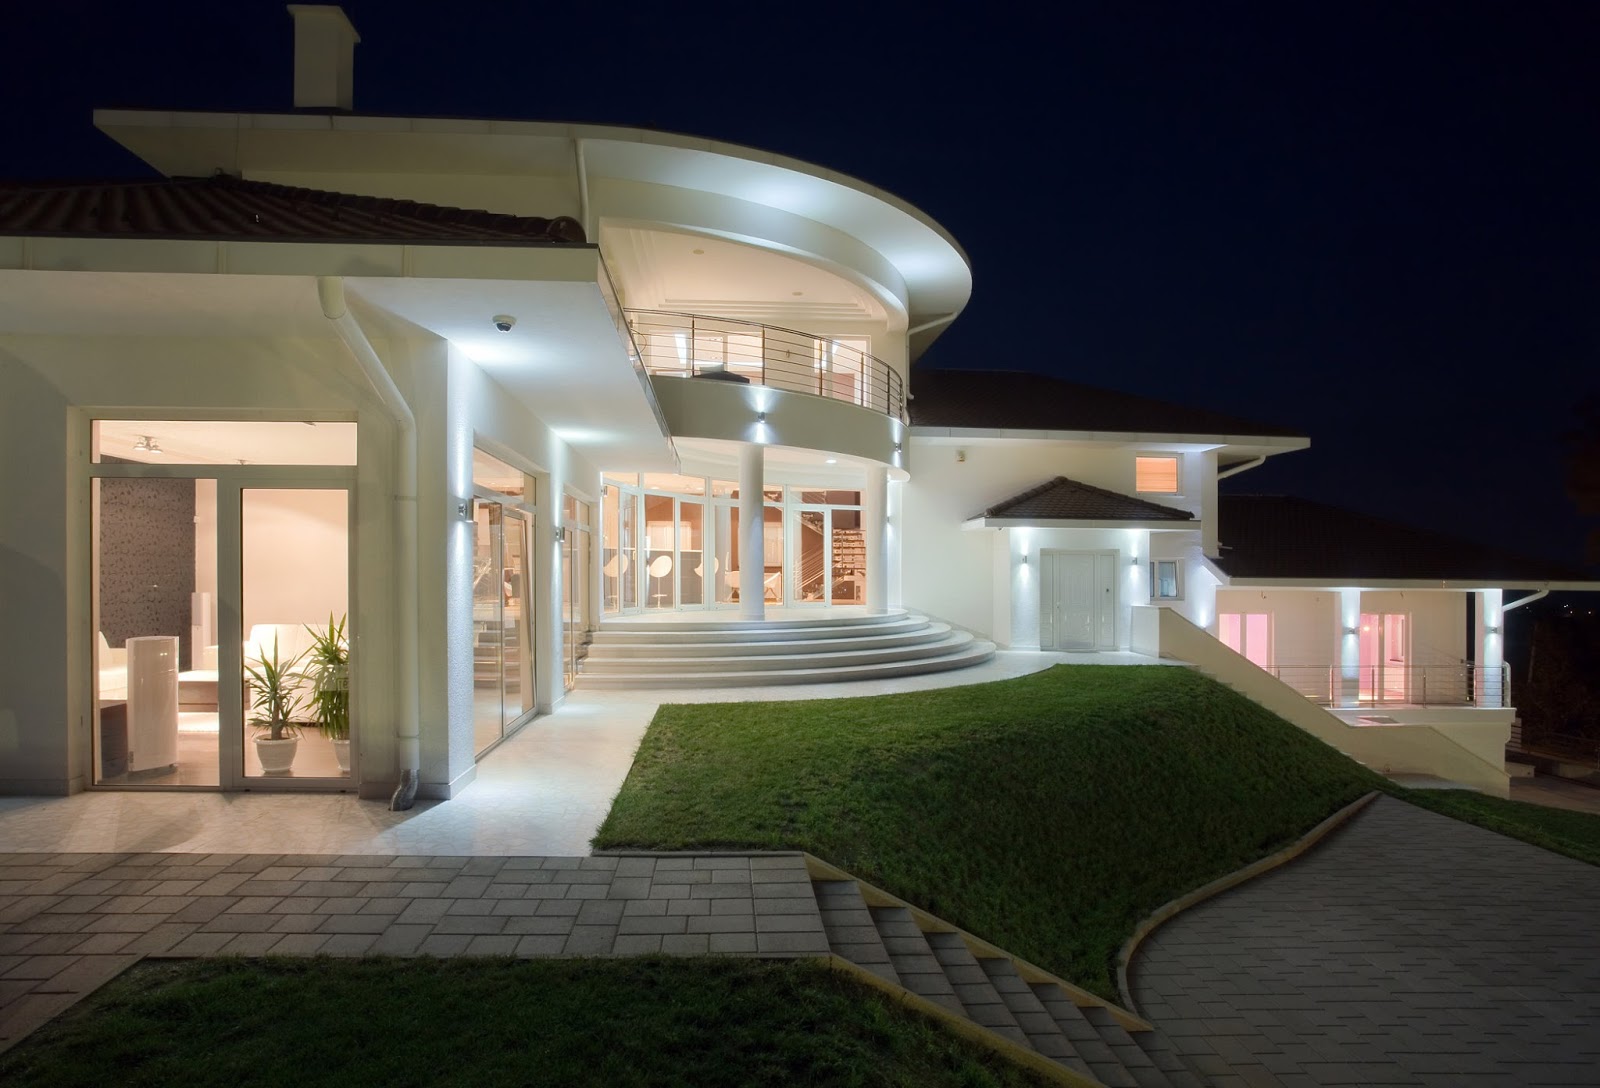 New home designs latest.: Singapore modern homes exterior designs.